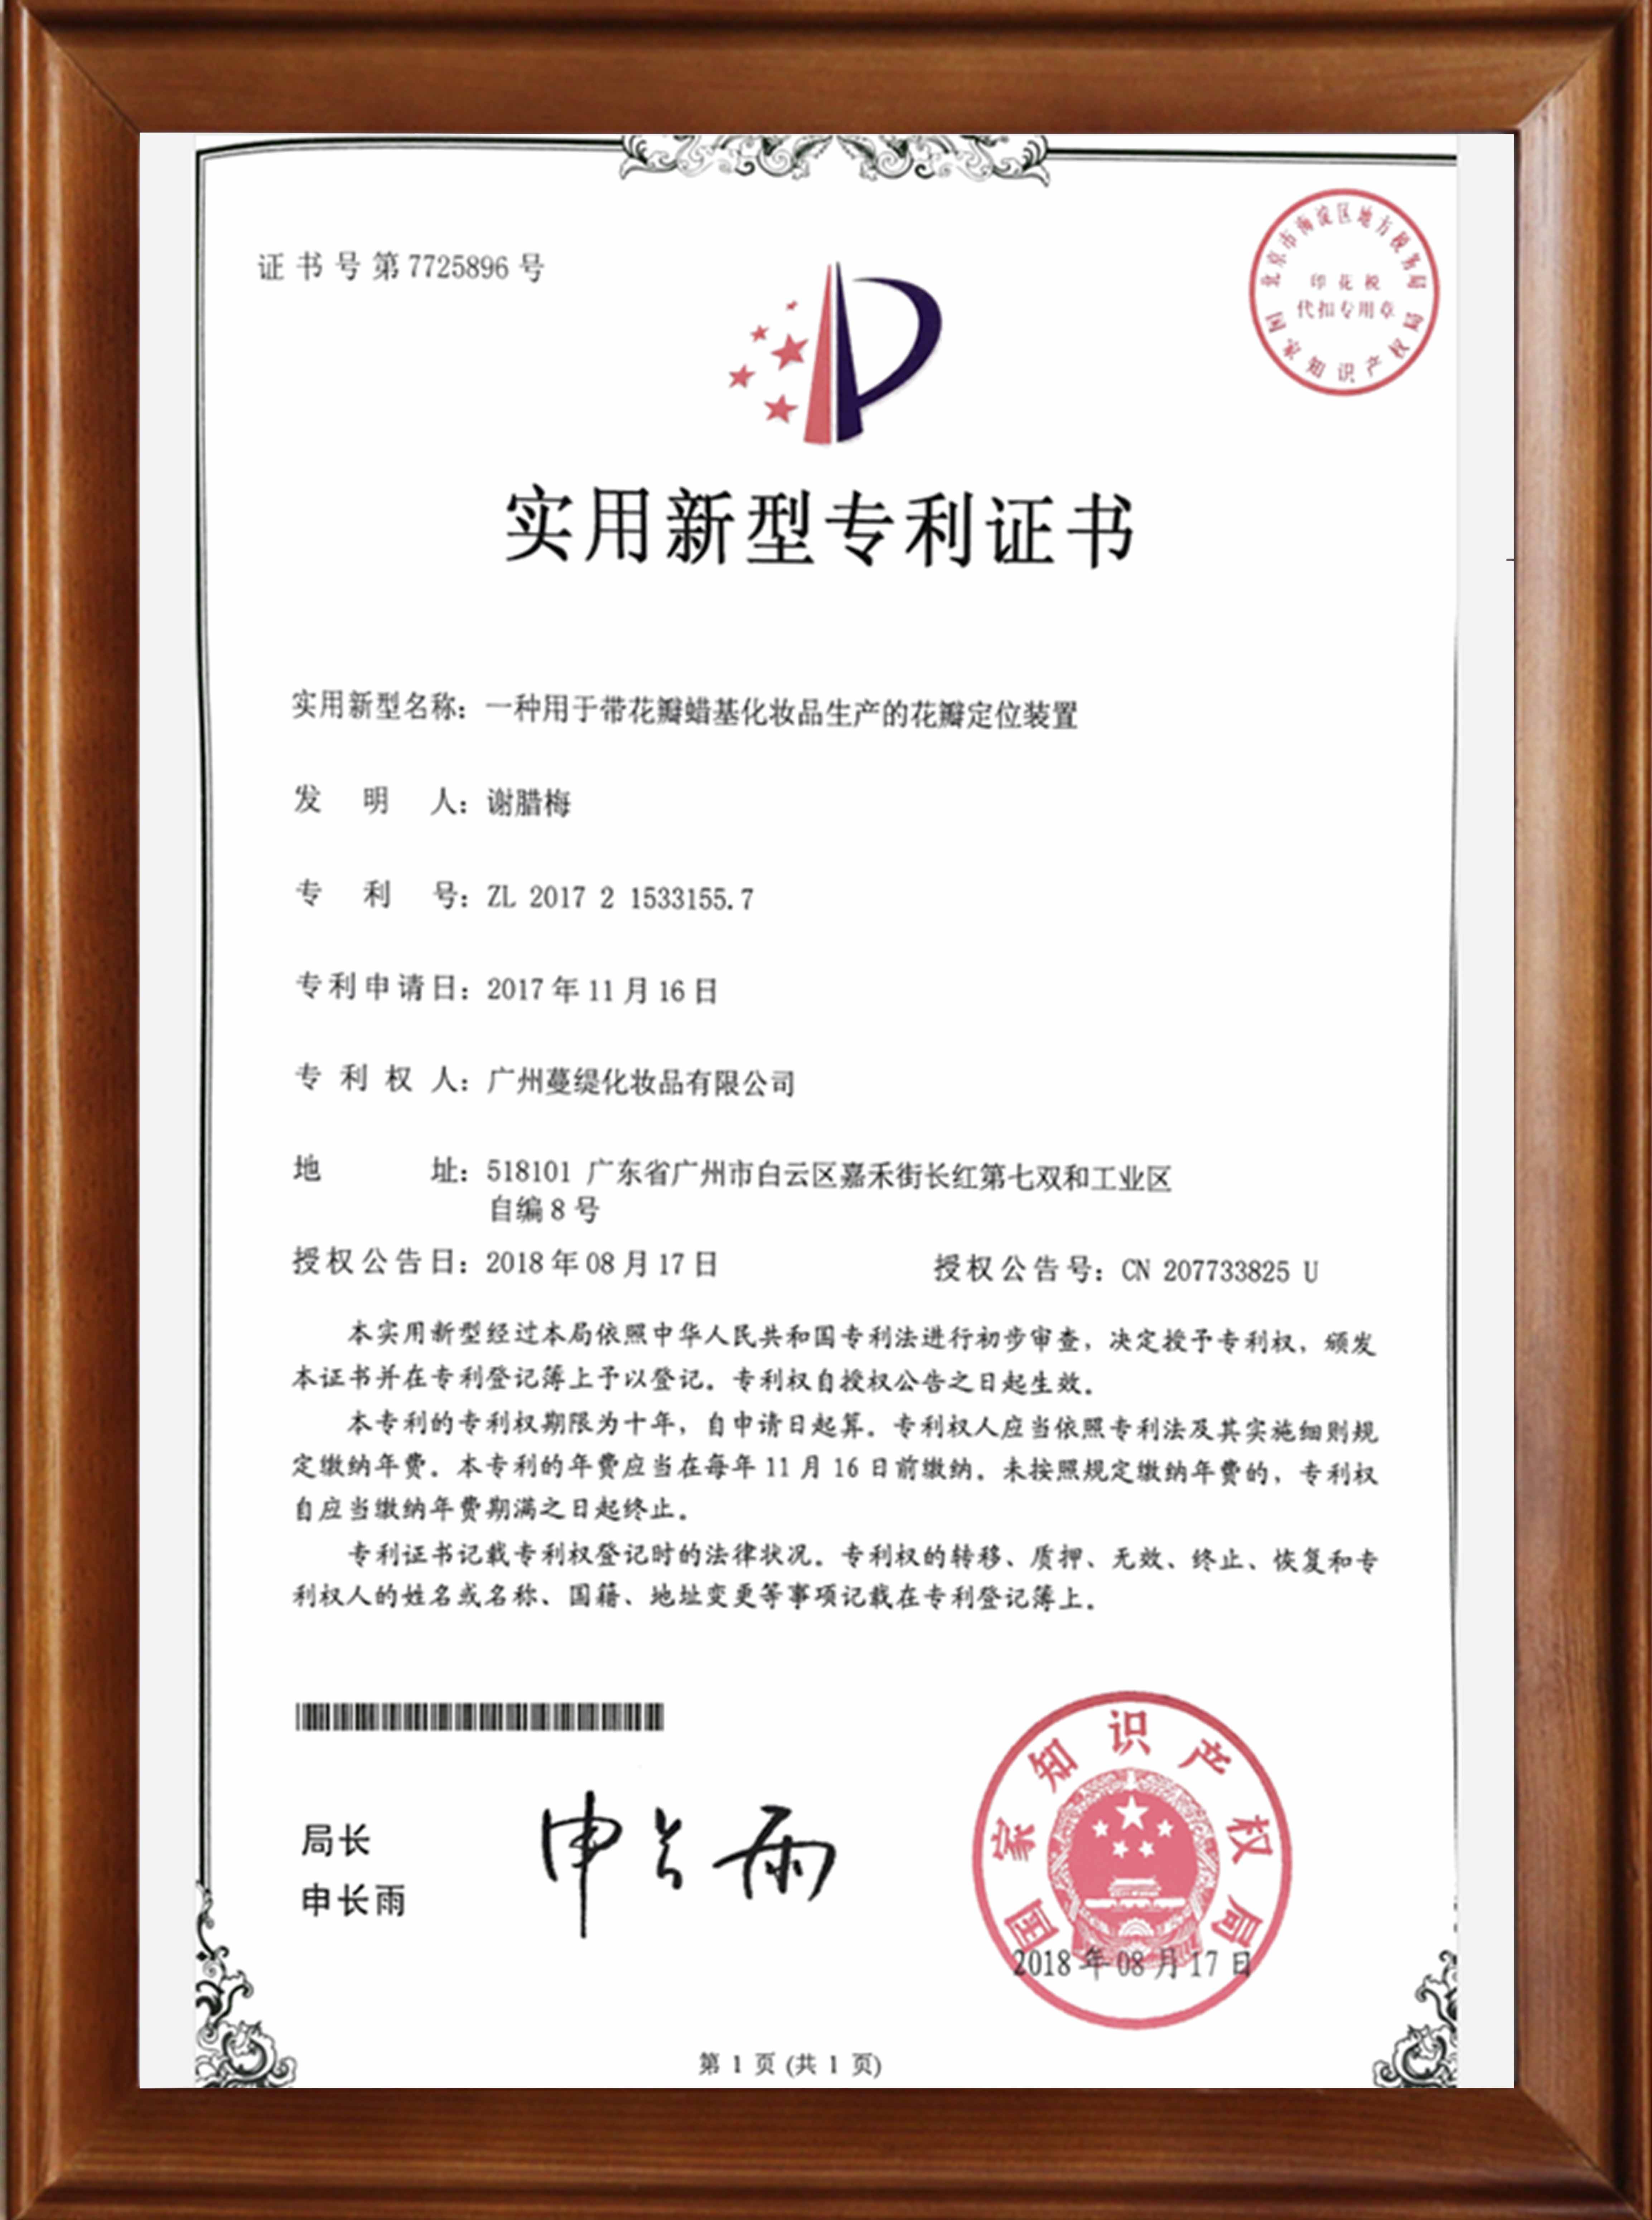 Patent of petal wax based cosmetics